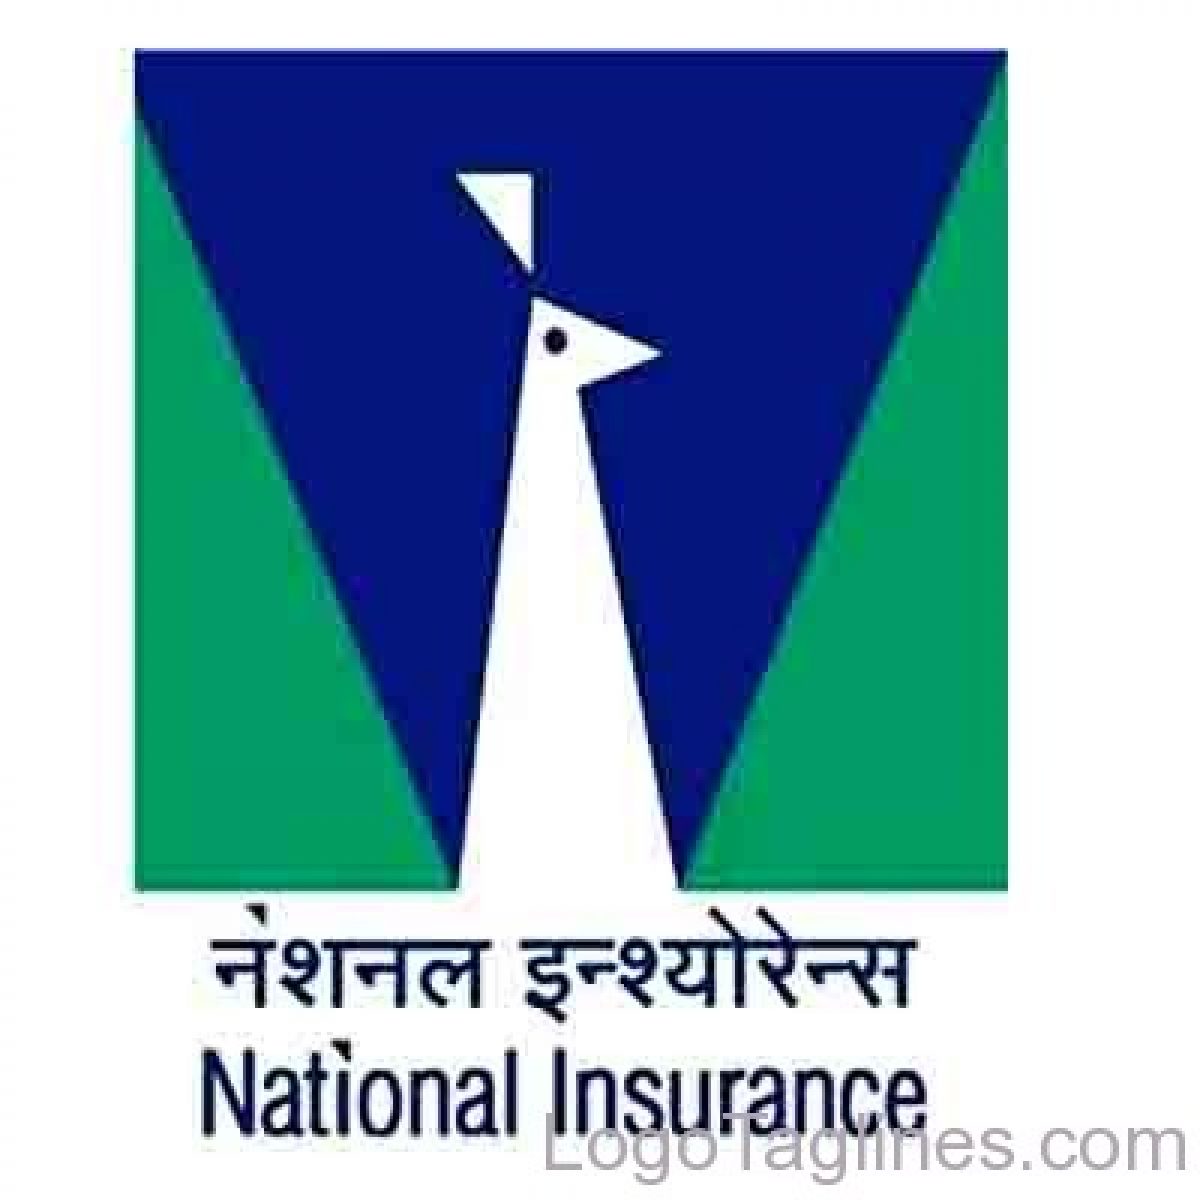 National Insurance Logo Images / National Insurance Company Limited ...